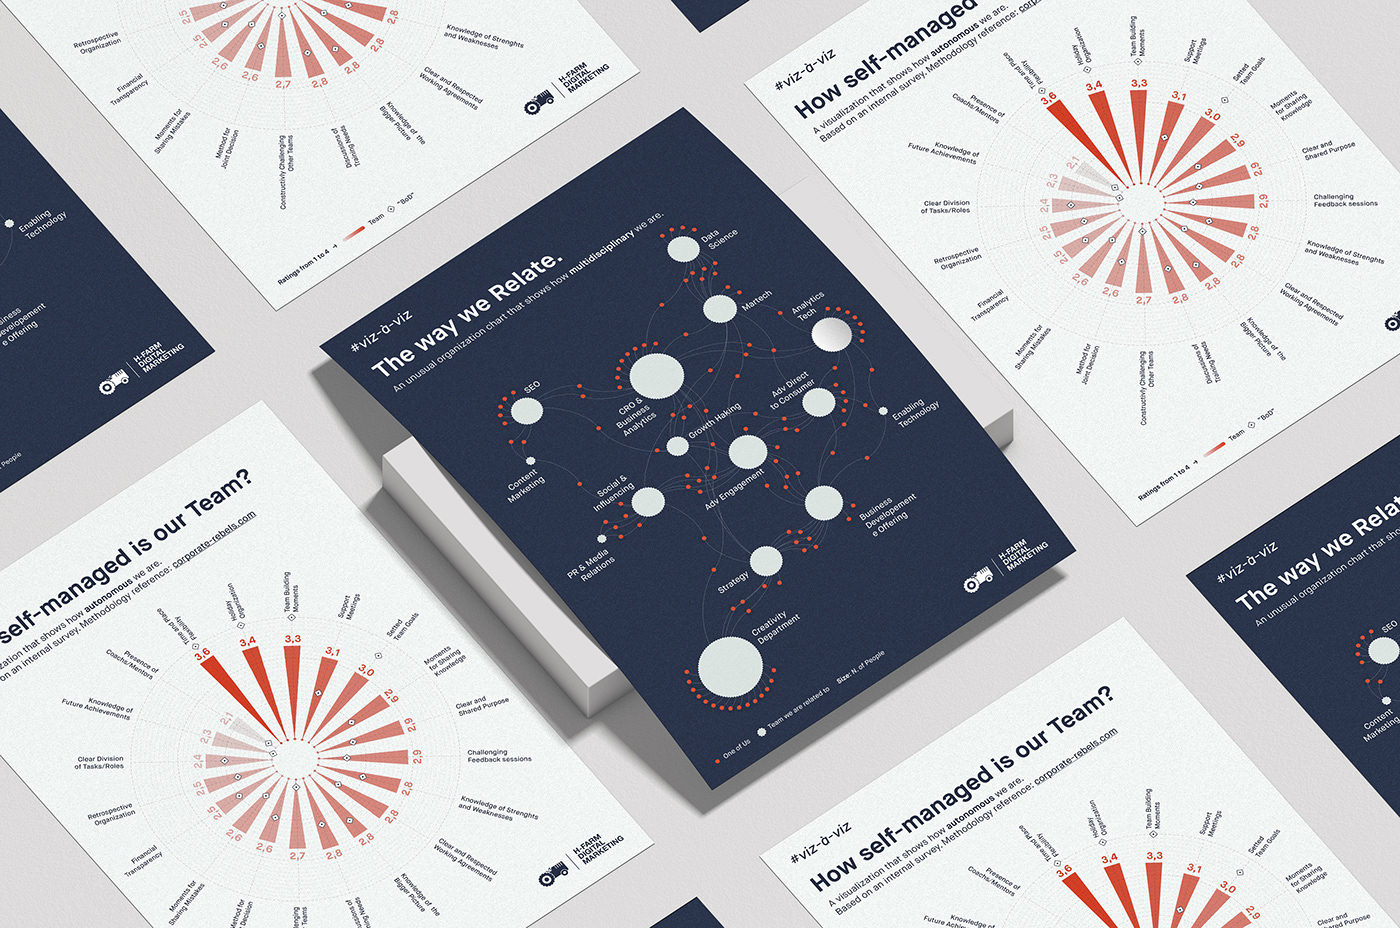 Data data visualization dataviz infographic information design networks poster Poster Design visualization